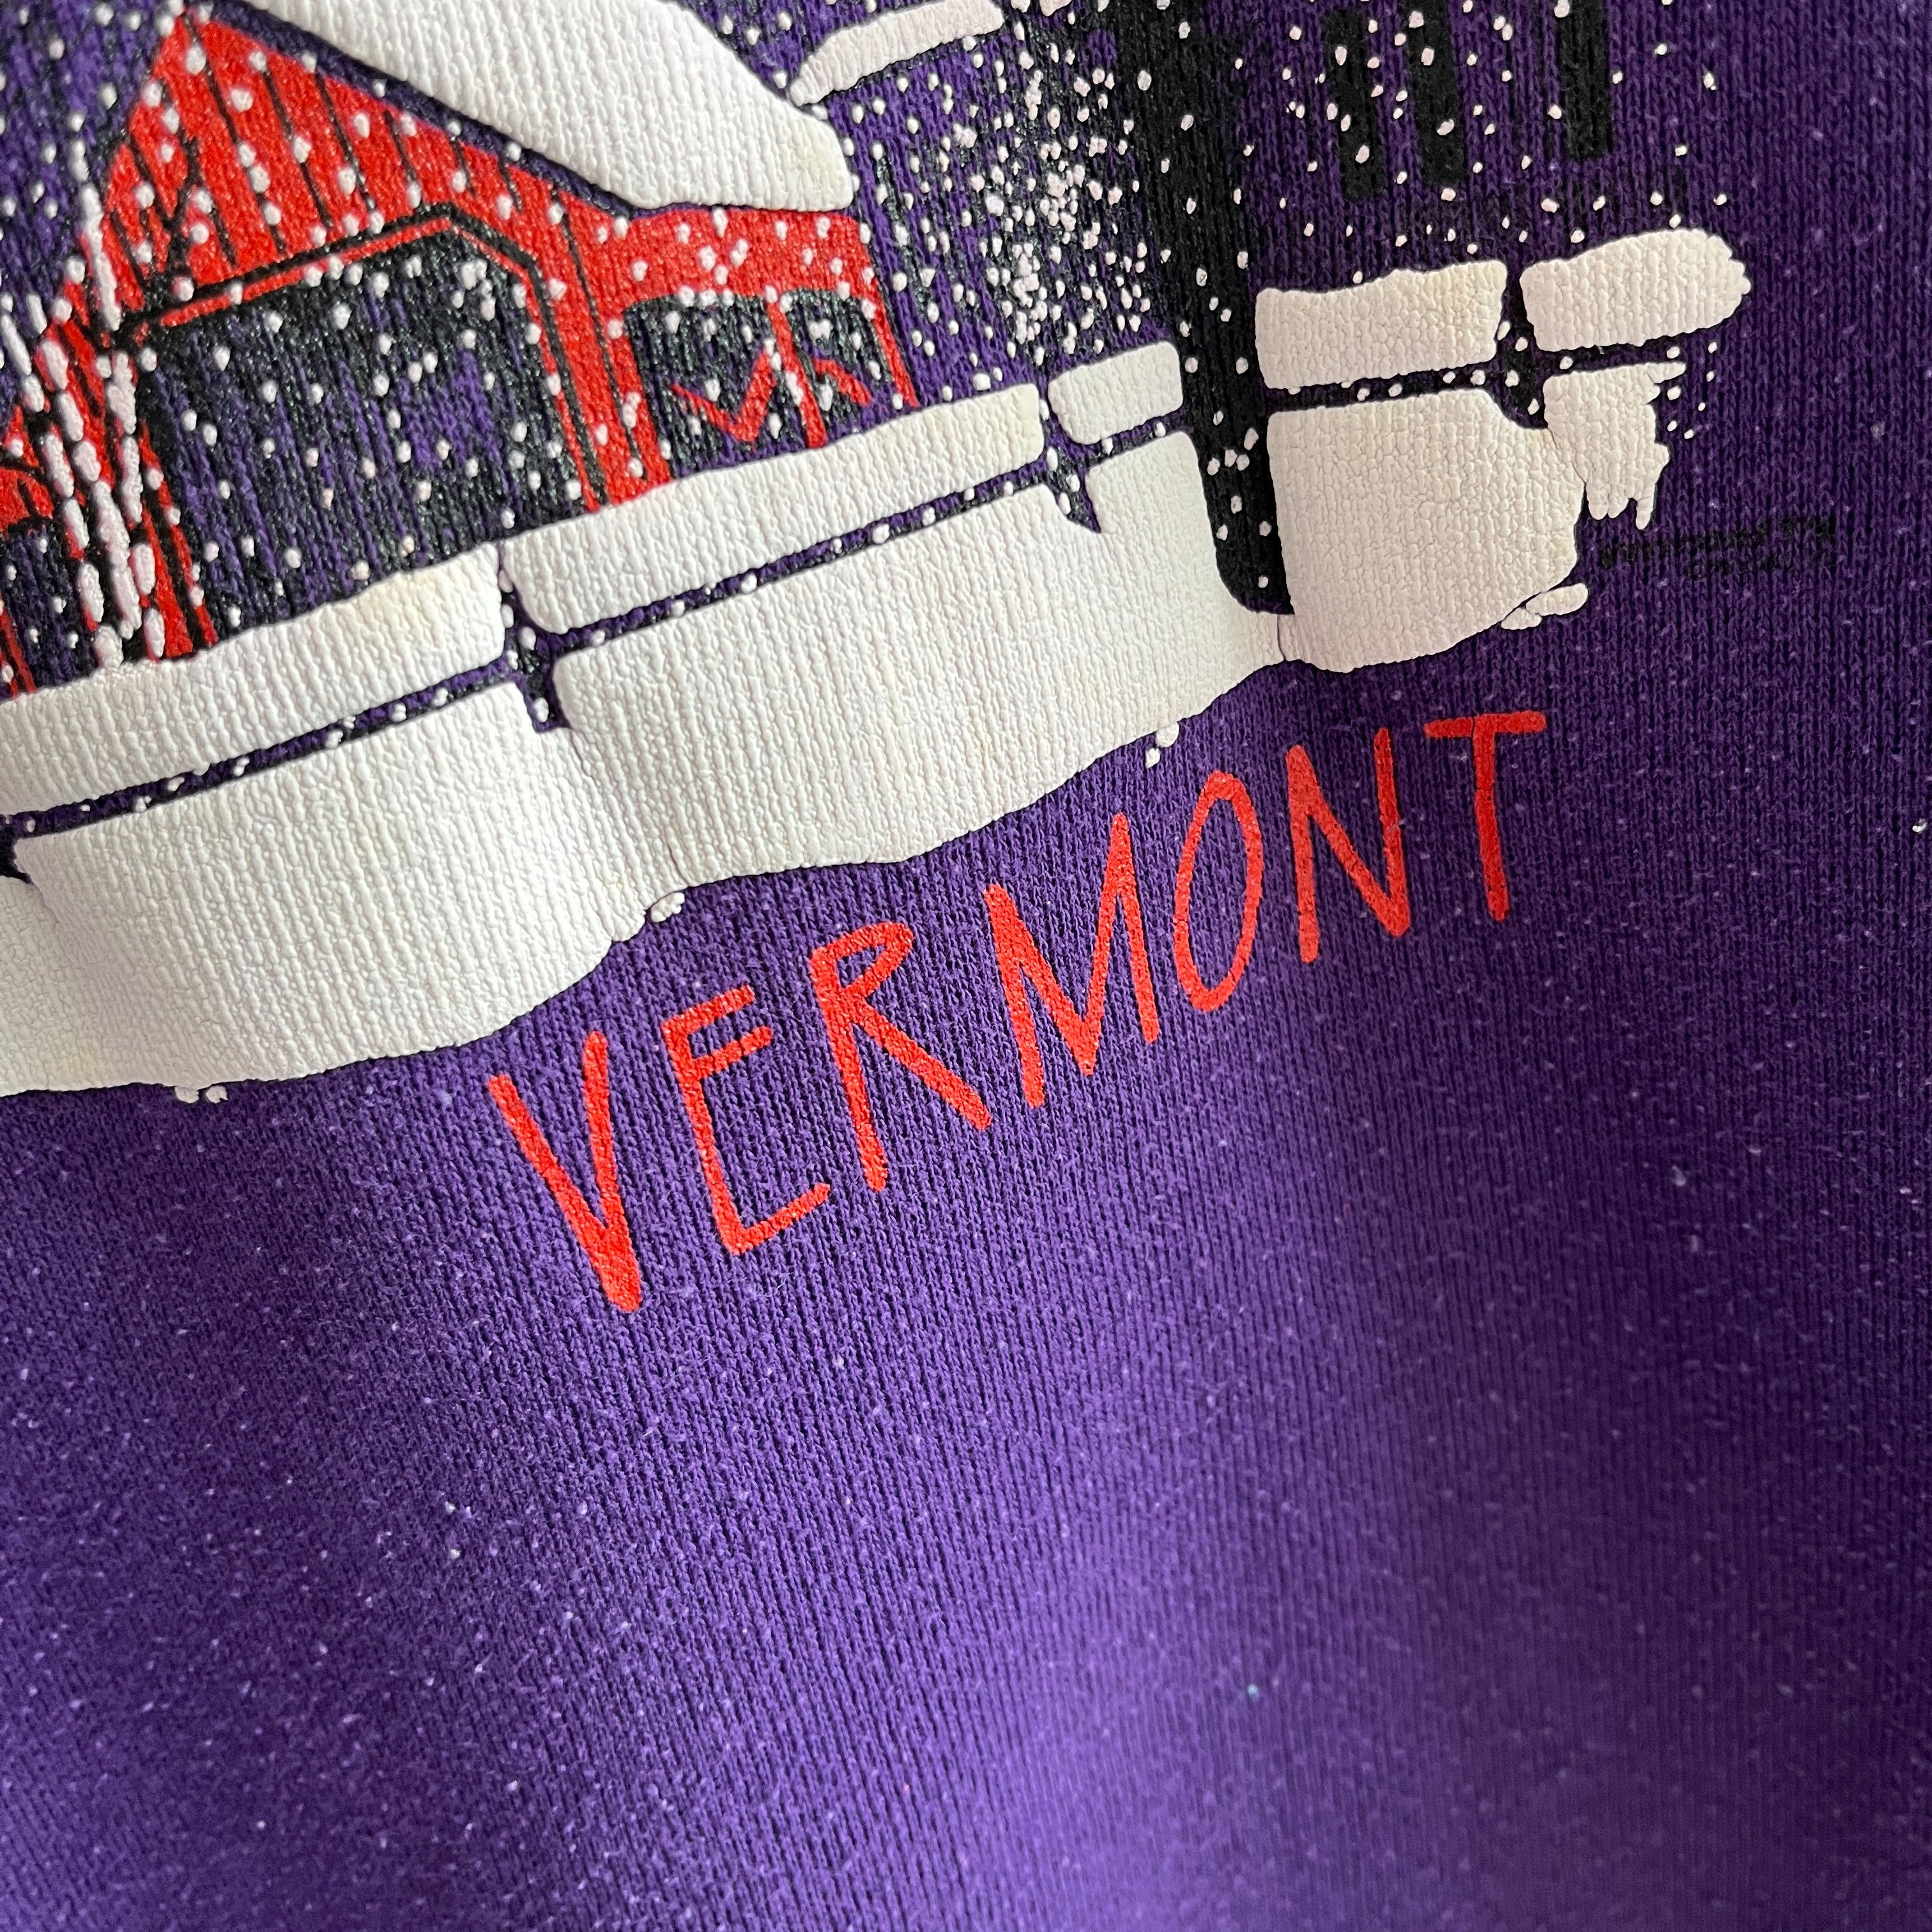 1980s Vermont Winterscape Sweatshirt